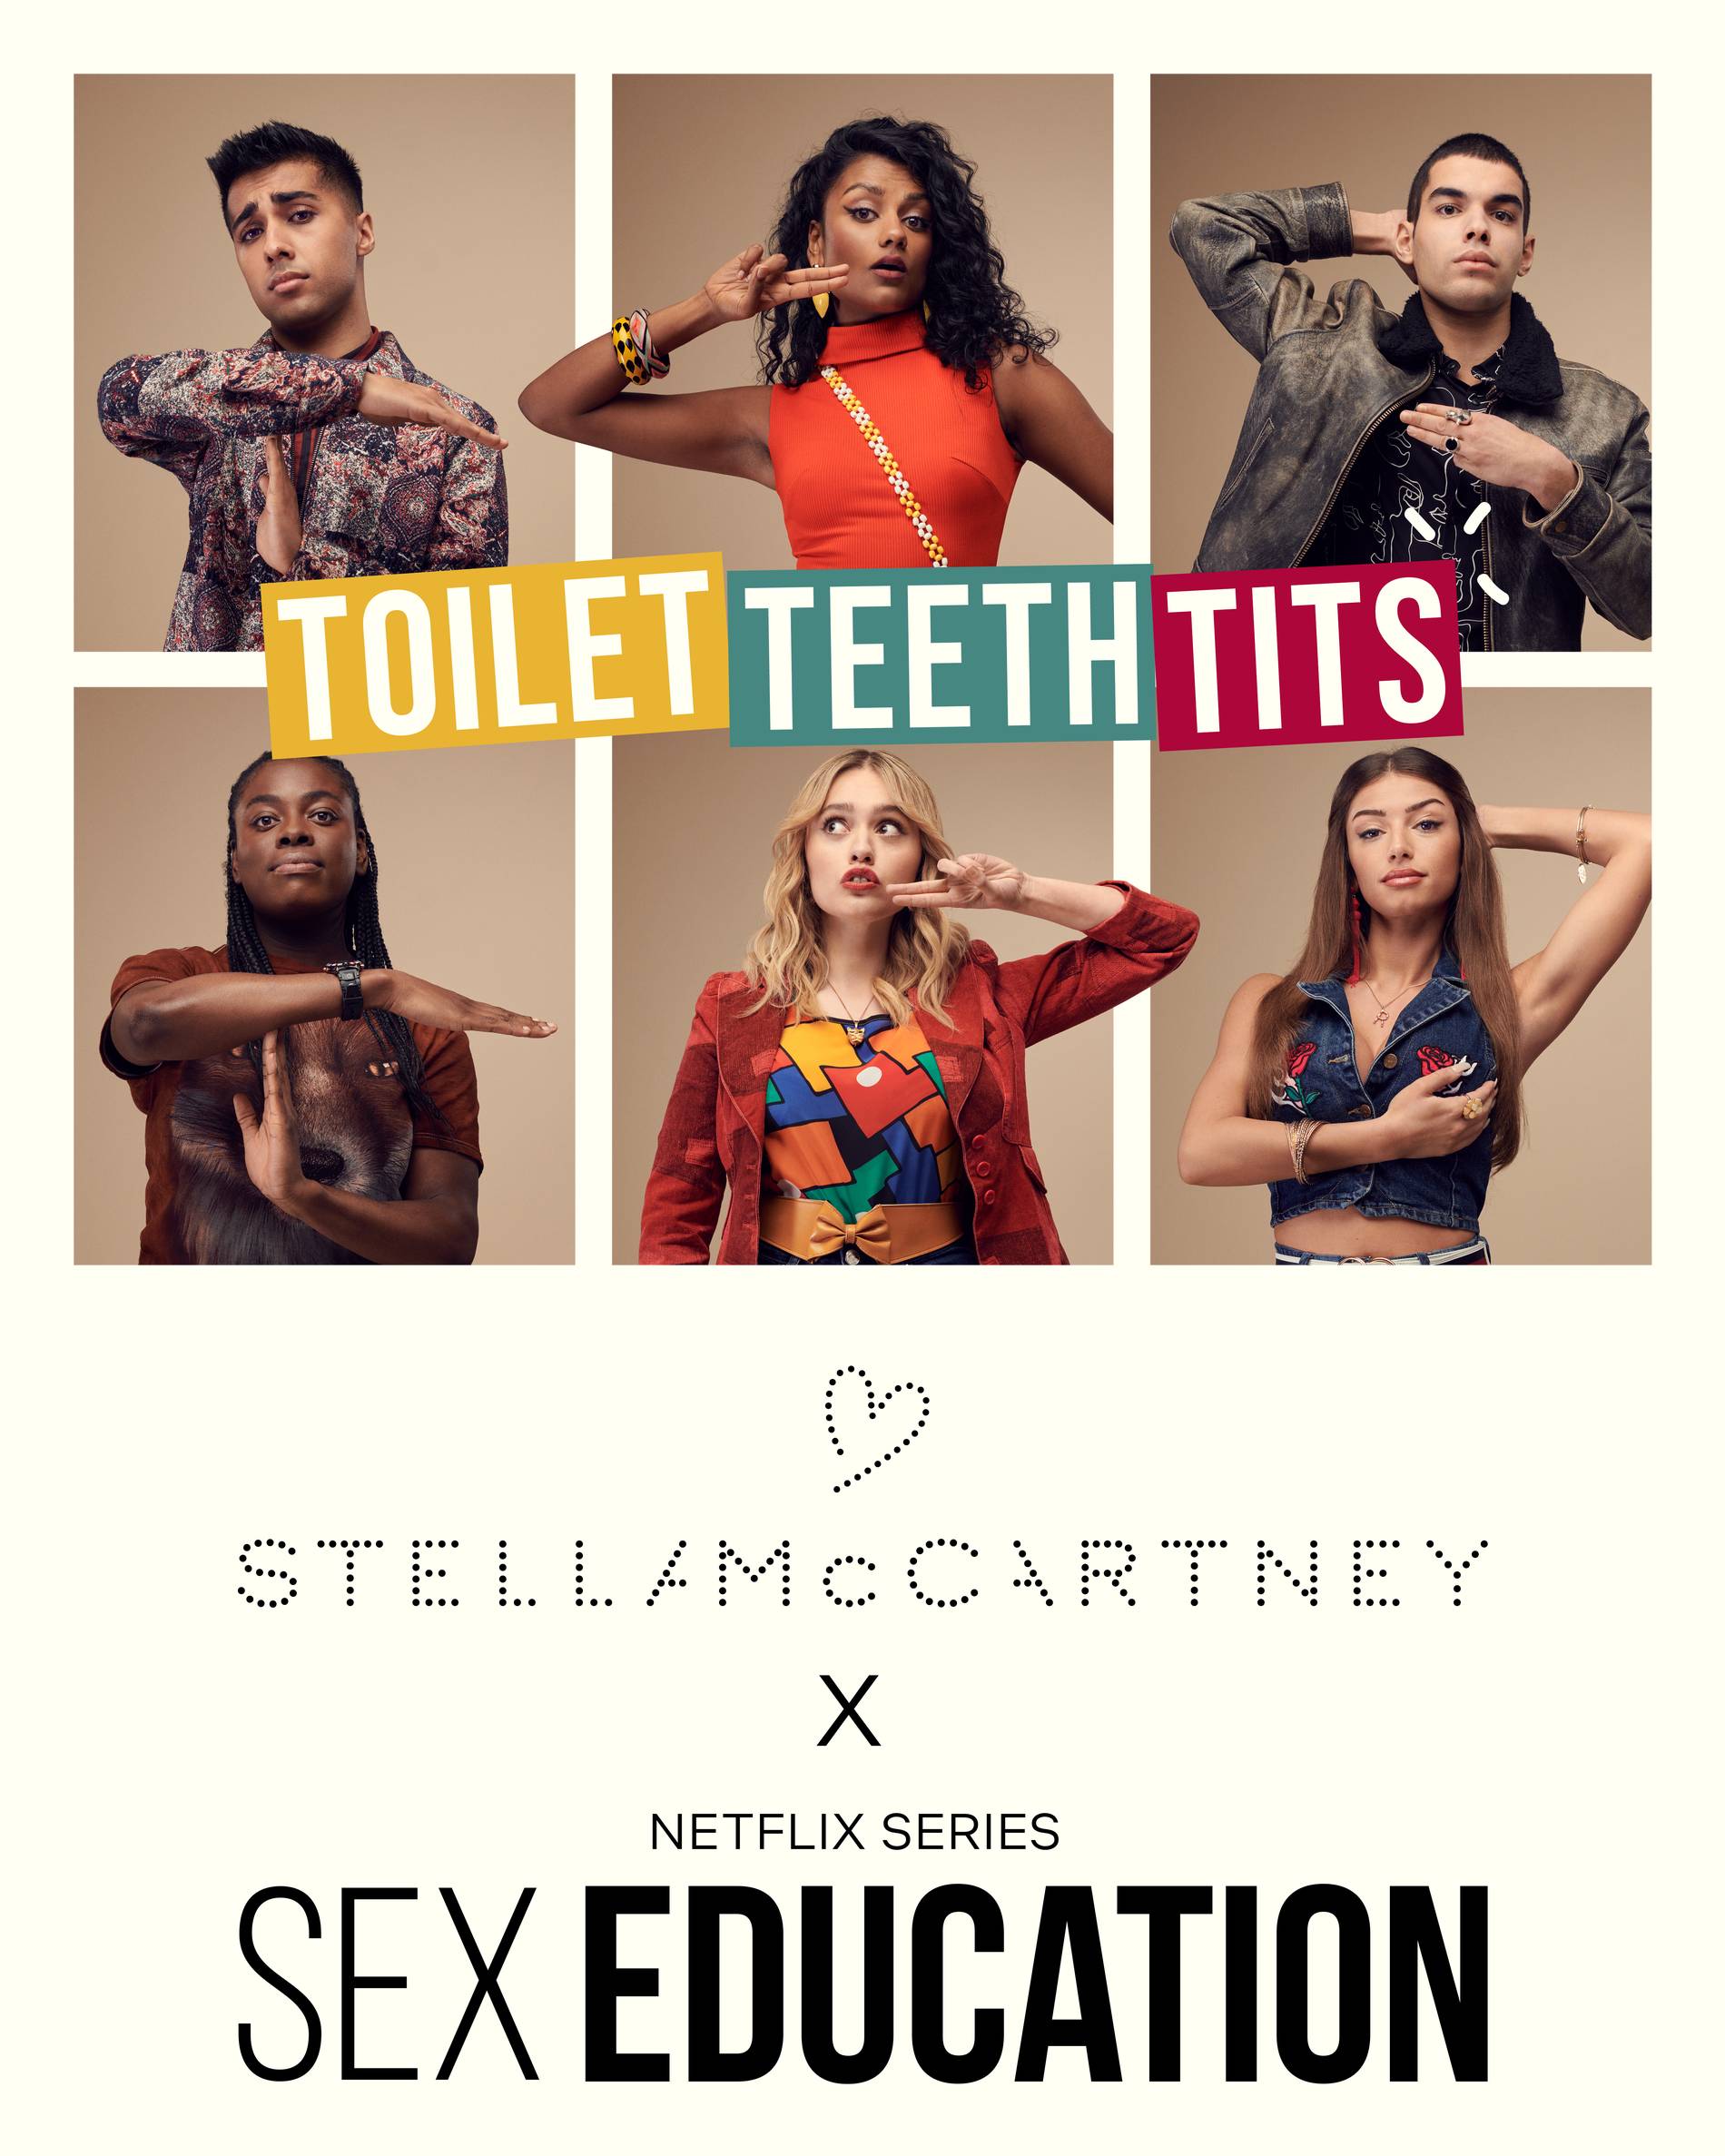 Stella McCartney and Netflix' Sex Education TTT campaign